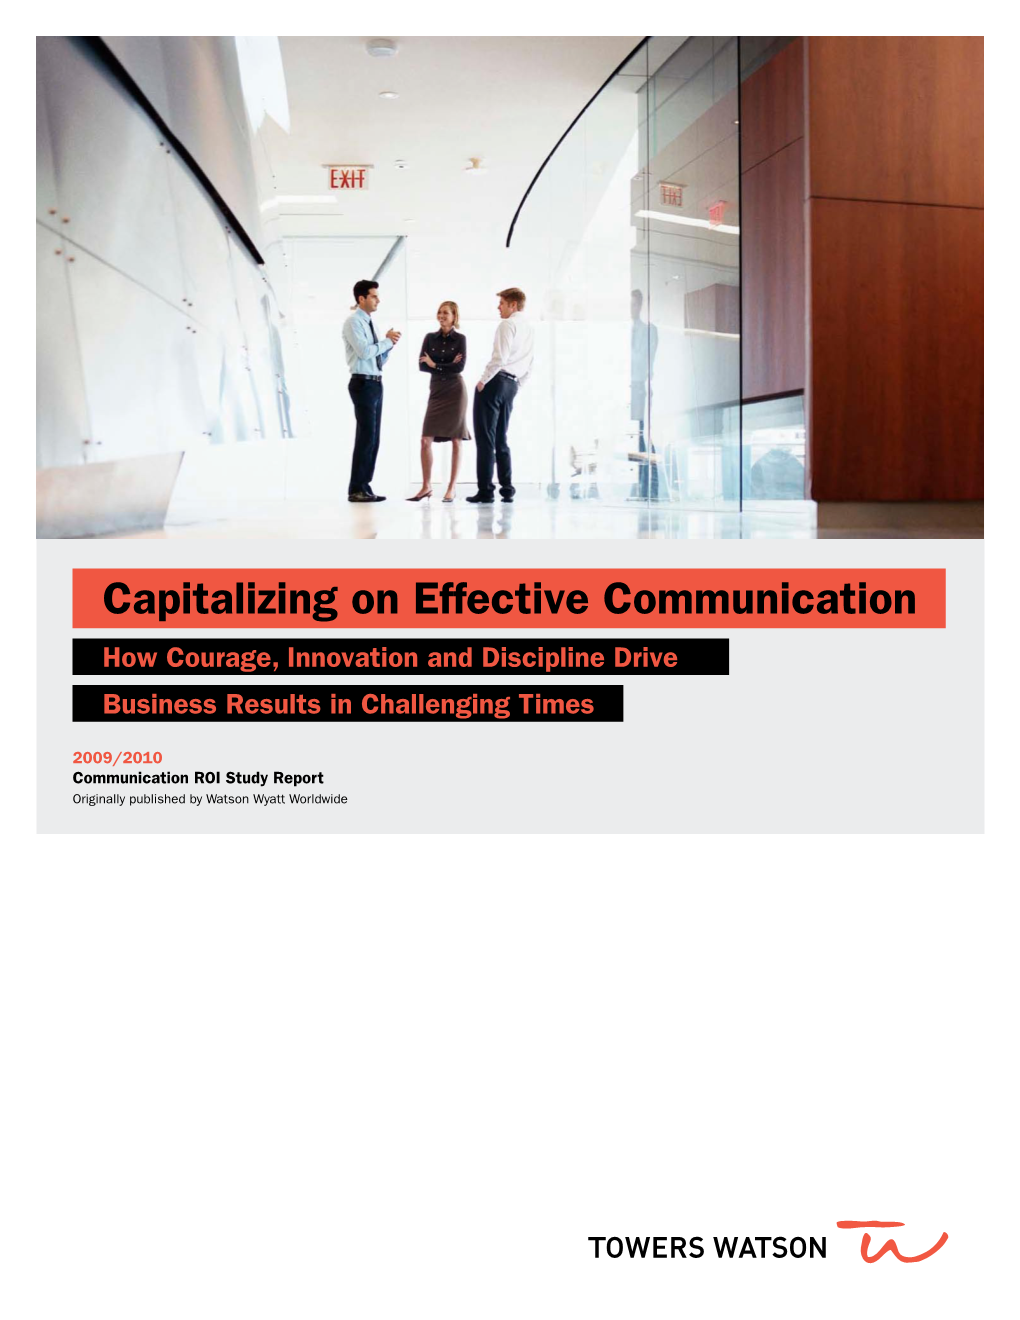 Towers Watson: Capitalizing on Effective Communication 2009